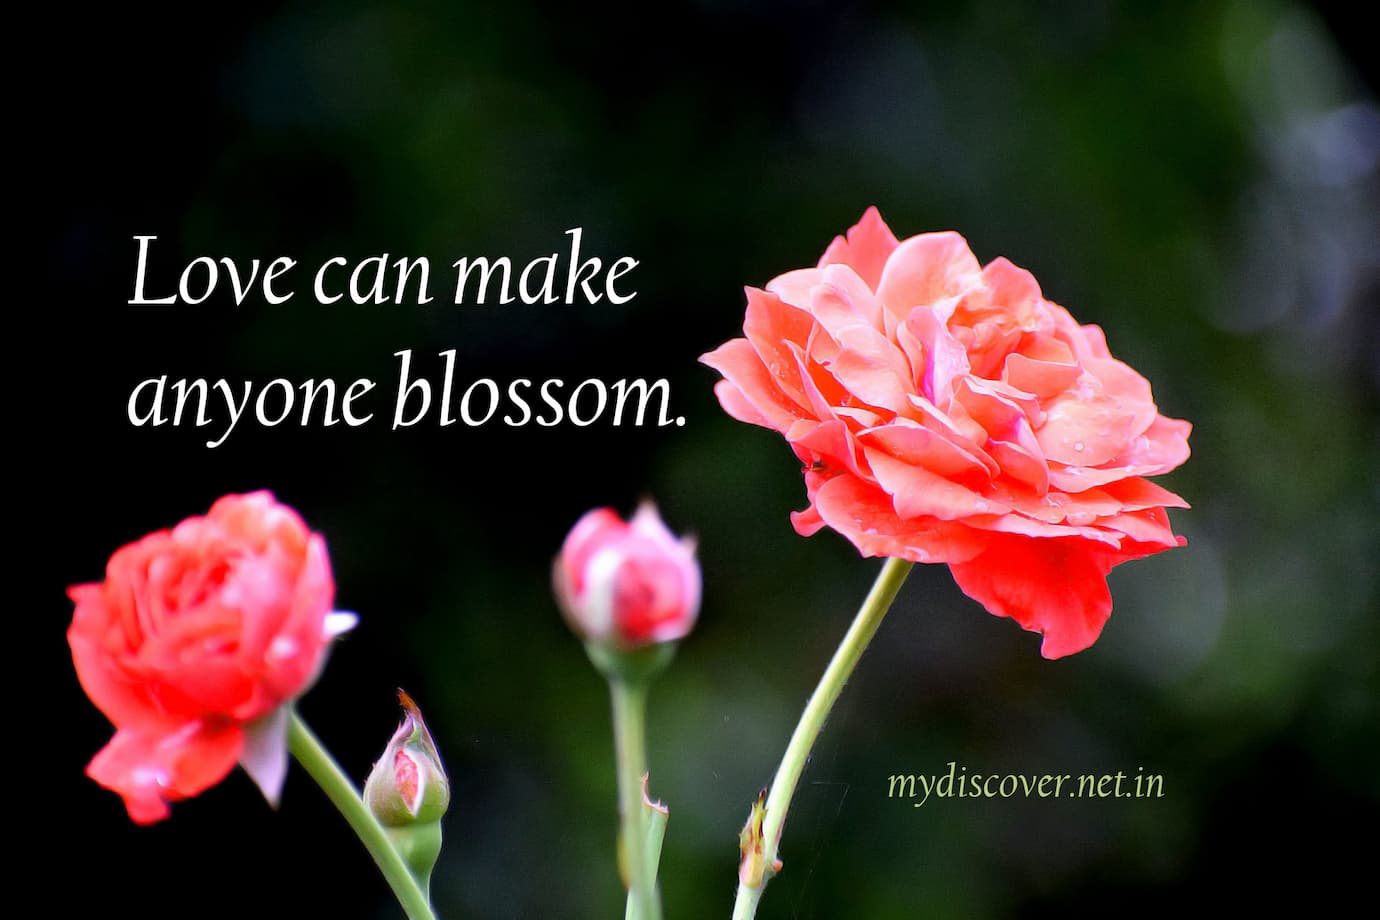 Love can make anyone blossom